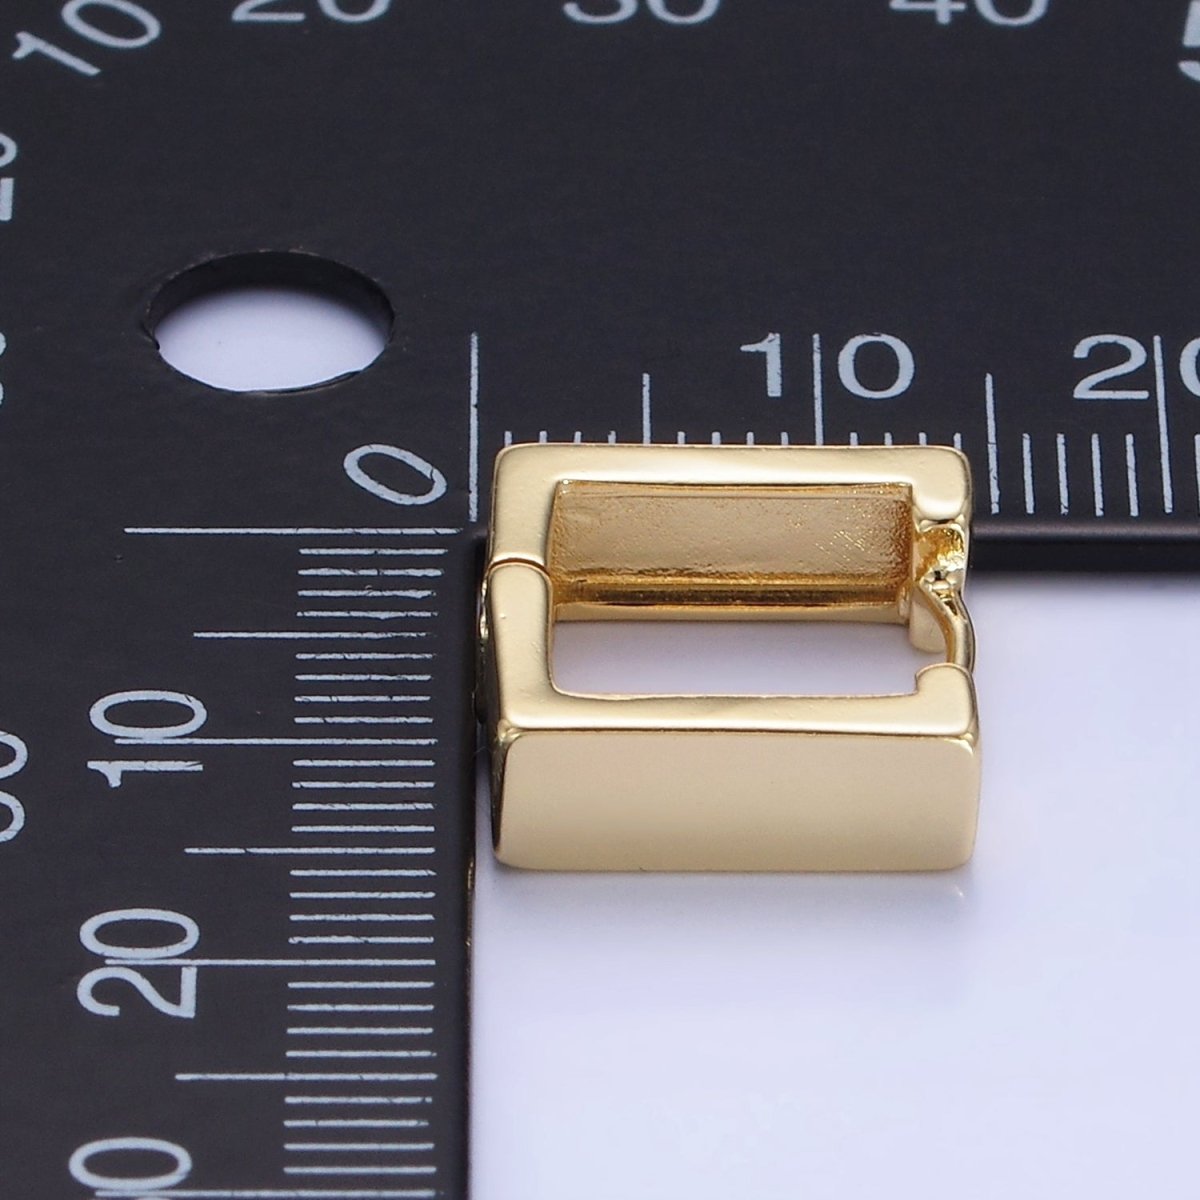 14K Gold Filled 14mm Minimalist Square Huggie Earrings | P480 - DLUXCA